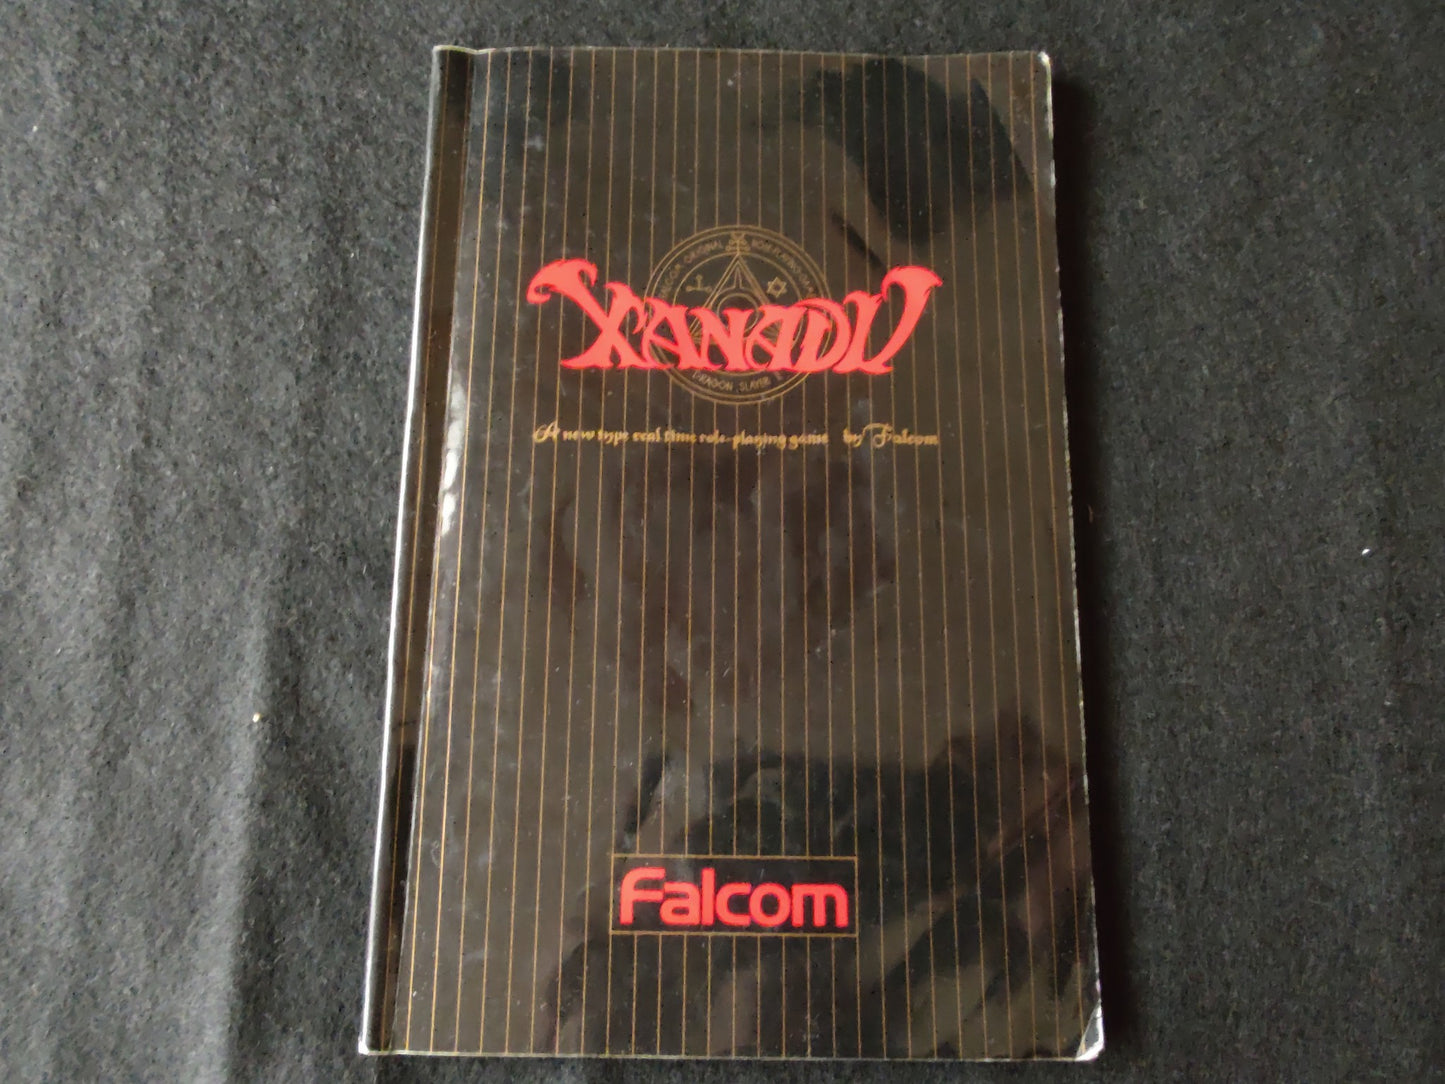 Xanadu Nihon Falcom MSX MSX2 Game Cartridge, Manual, Box set tested-f0113-